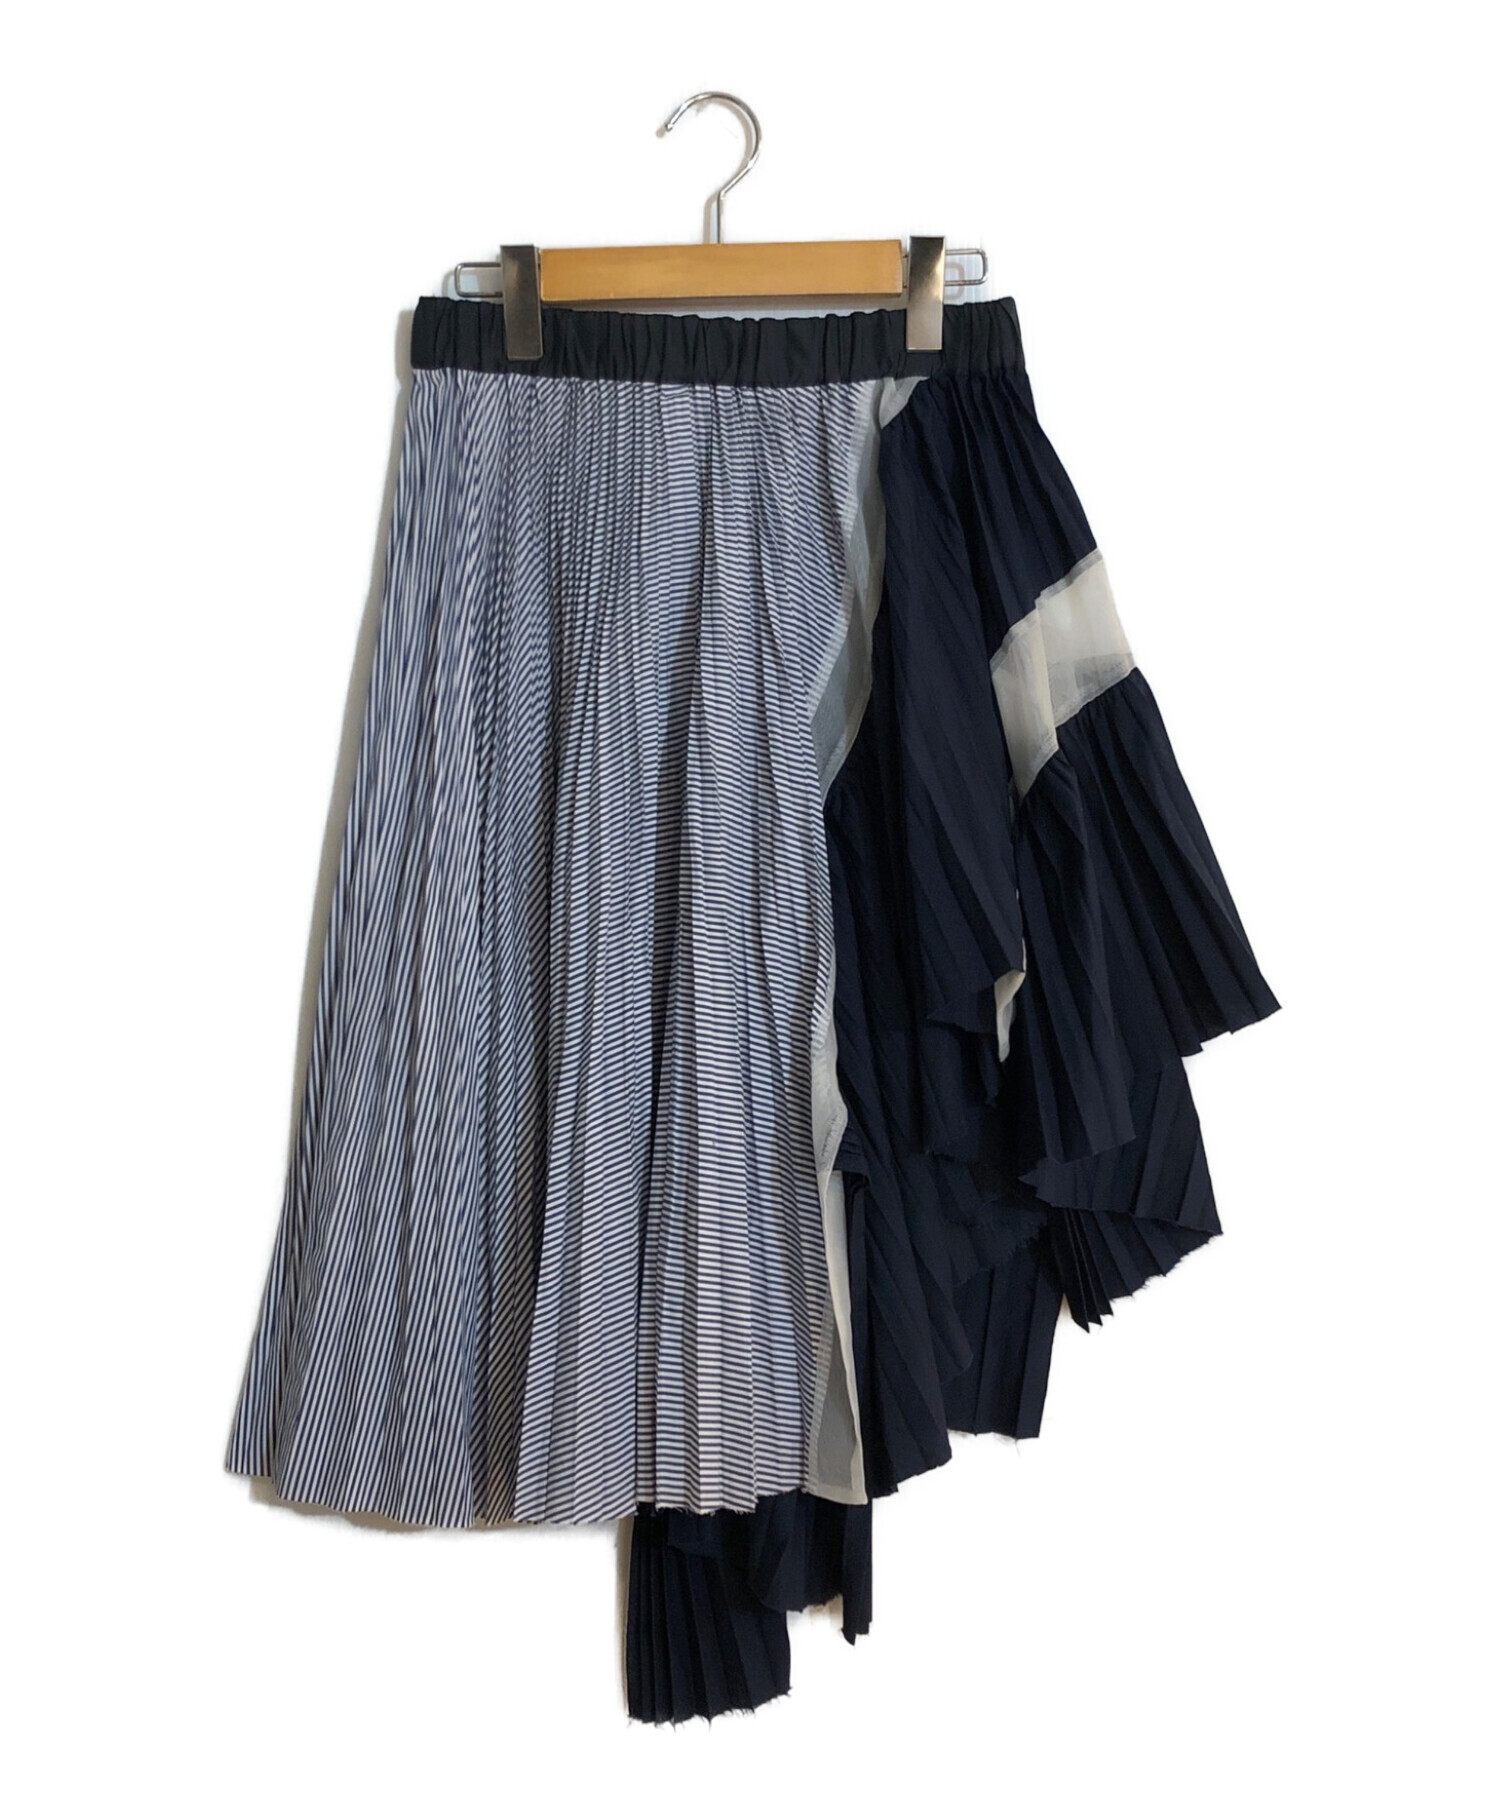 sacai (サカイ) Stripe Drape Skirt/ストライプドレープスカート ネイビー×ホワイト サイズ:SIZE 1